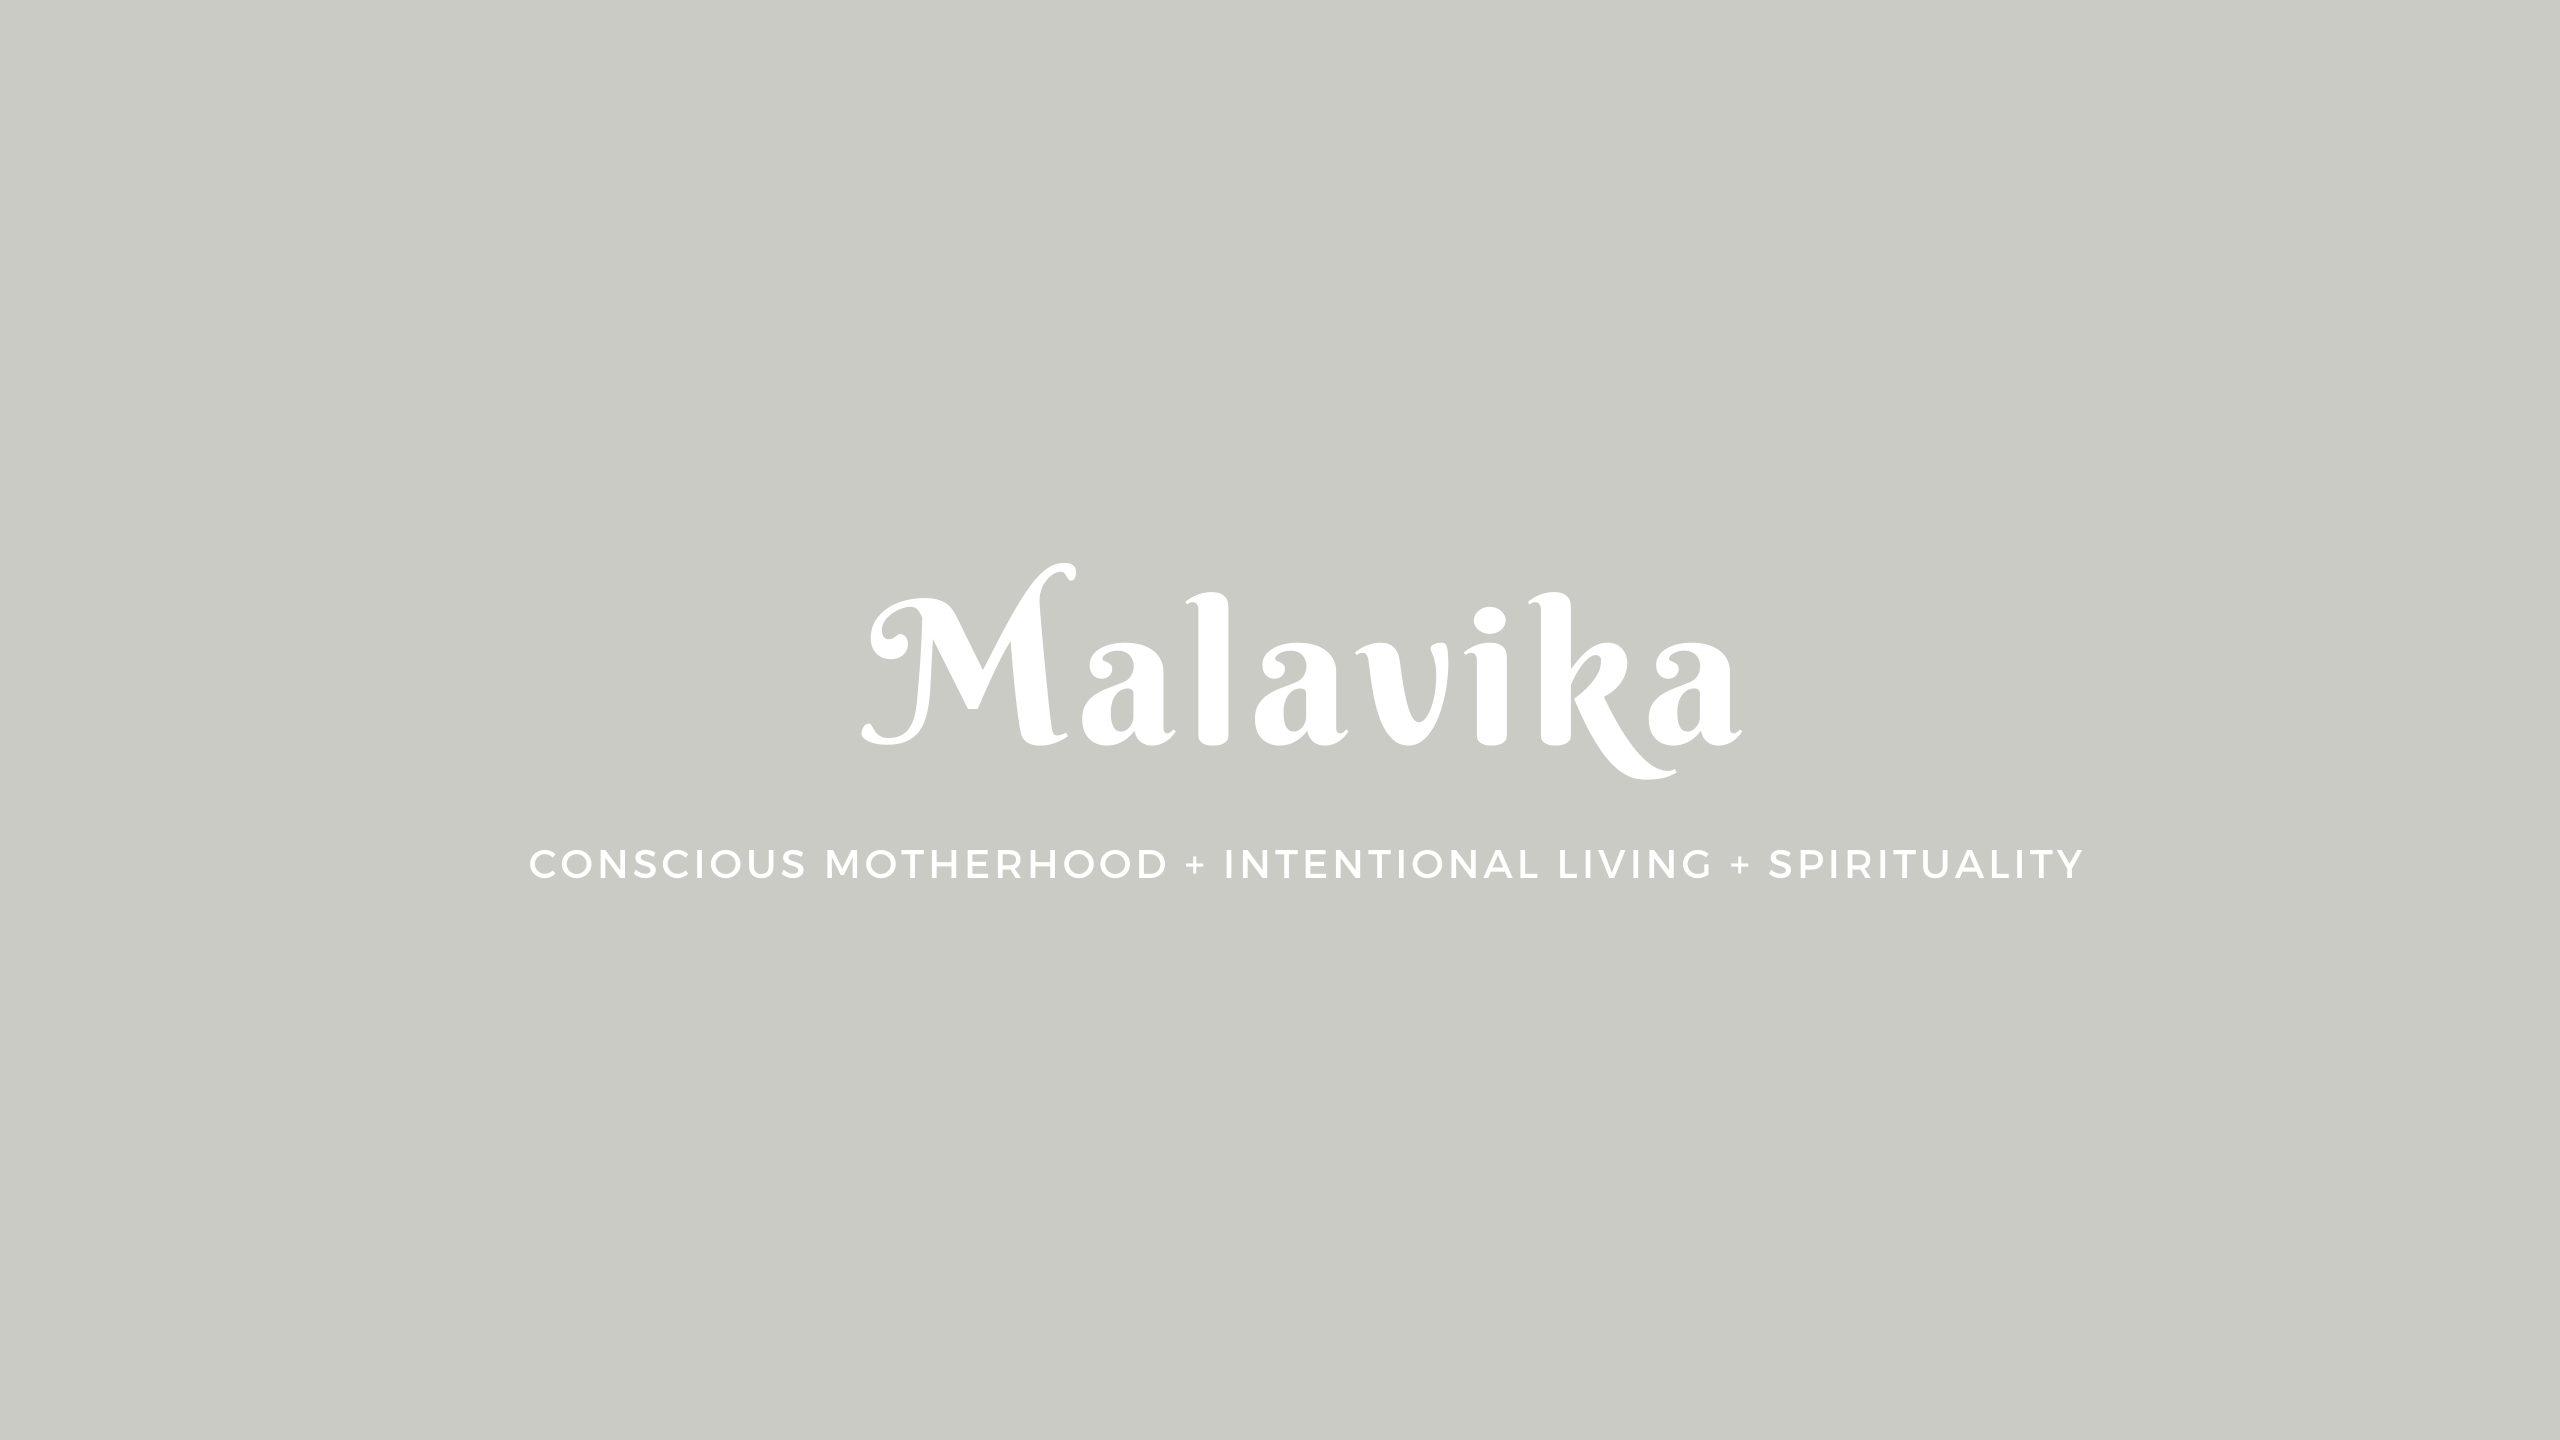 Malavika – Spirituality + Intentional living + Conscious Motherhood